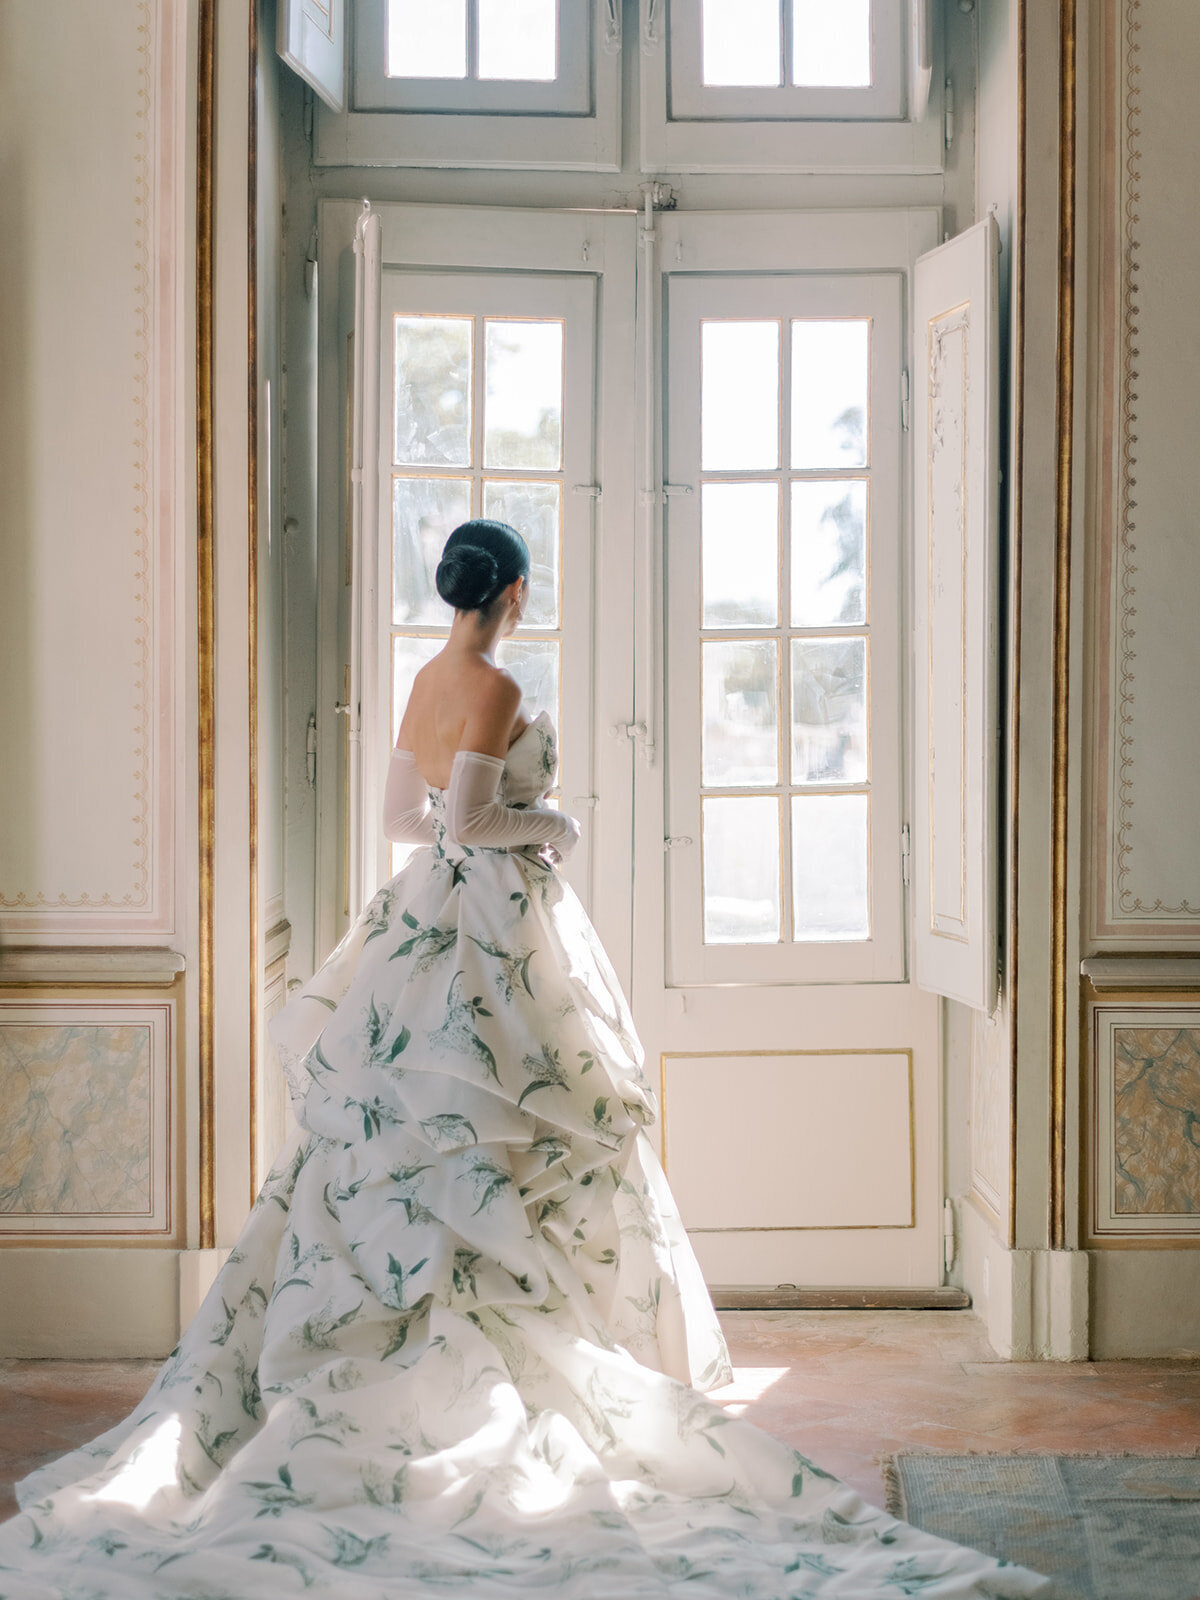 Portugal luxury wedding Sofia Nascimento Studios